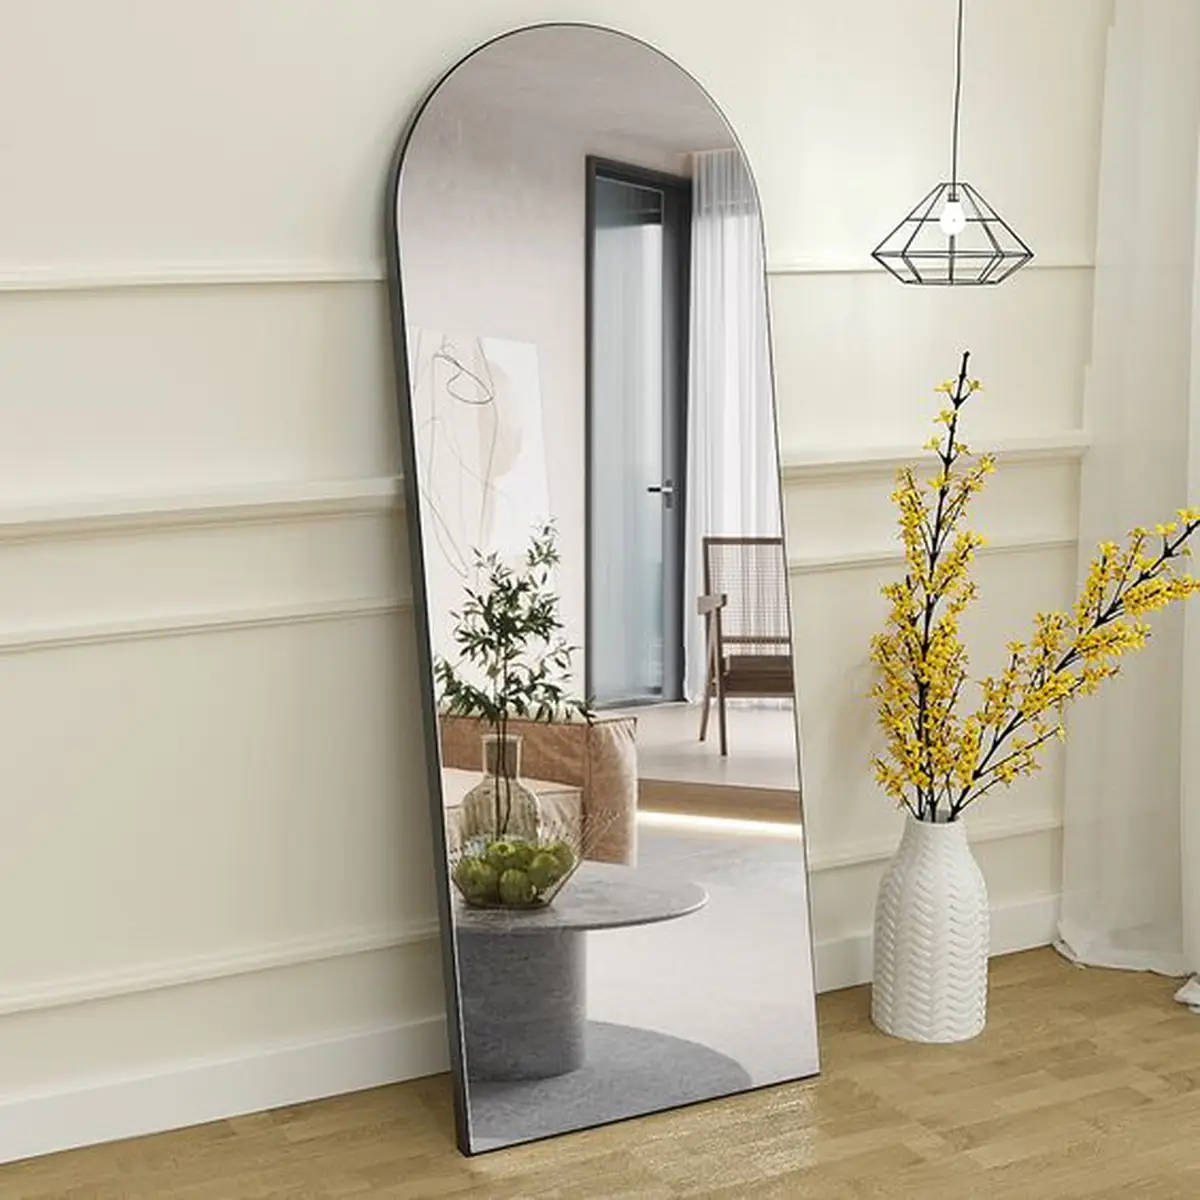 آینه قدی چوبی